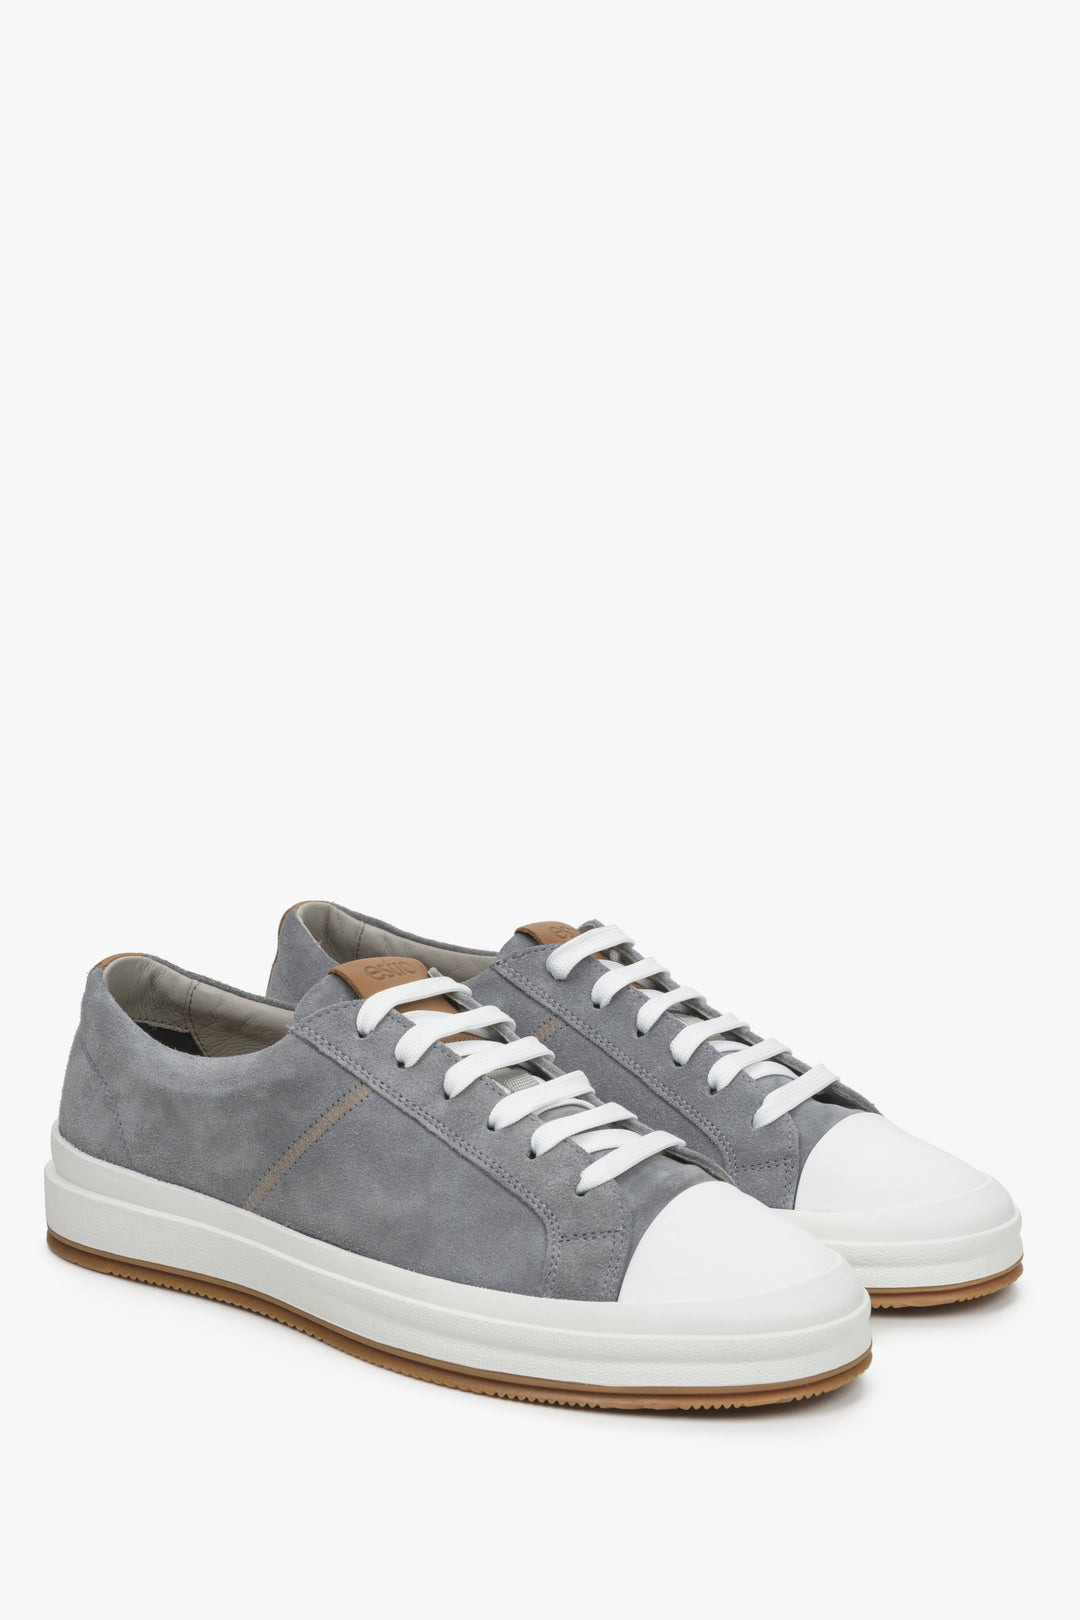 Men's grey velour sneakers by Estro.